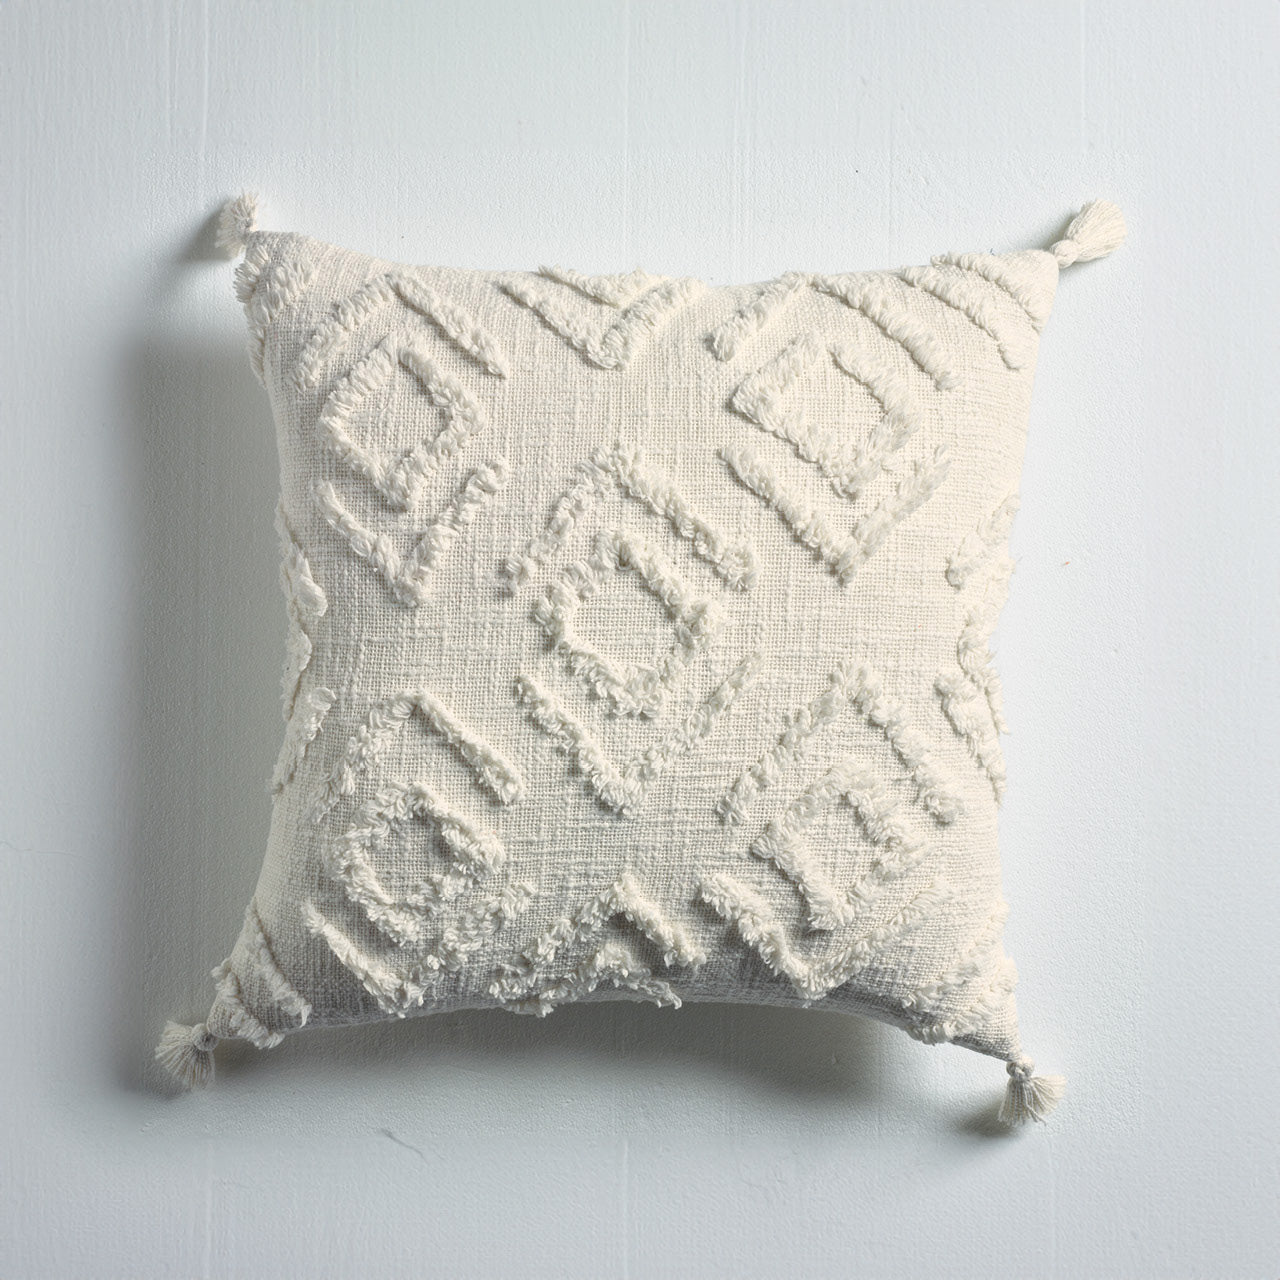 Aspen Cushion Cover Sugar on a white background